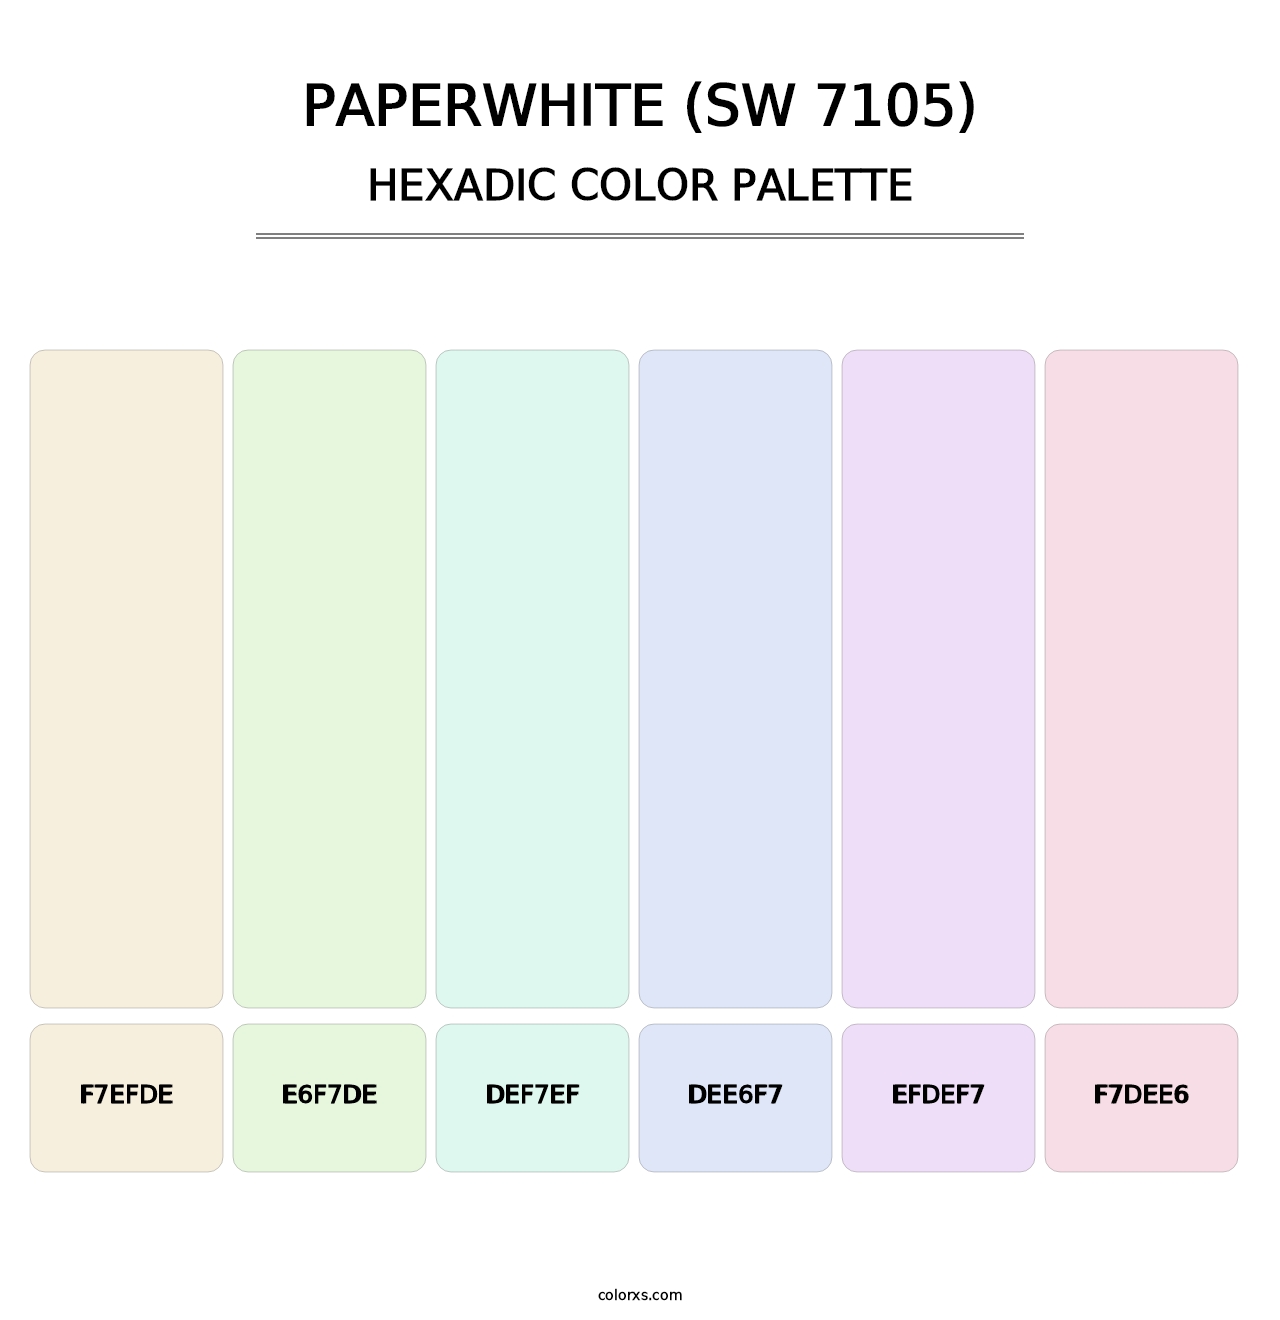 Paperwhite (SW 7105) - Hexadic Color Palette